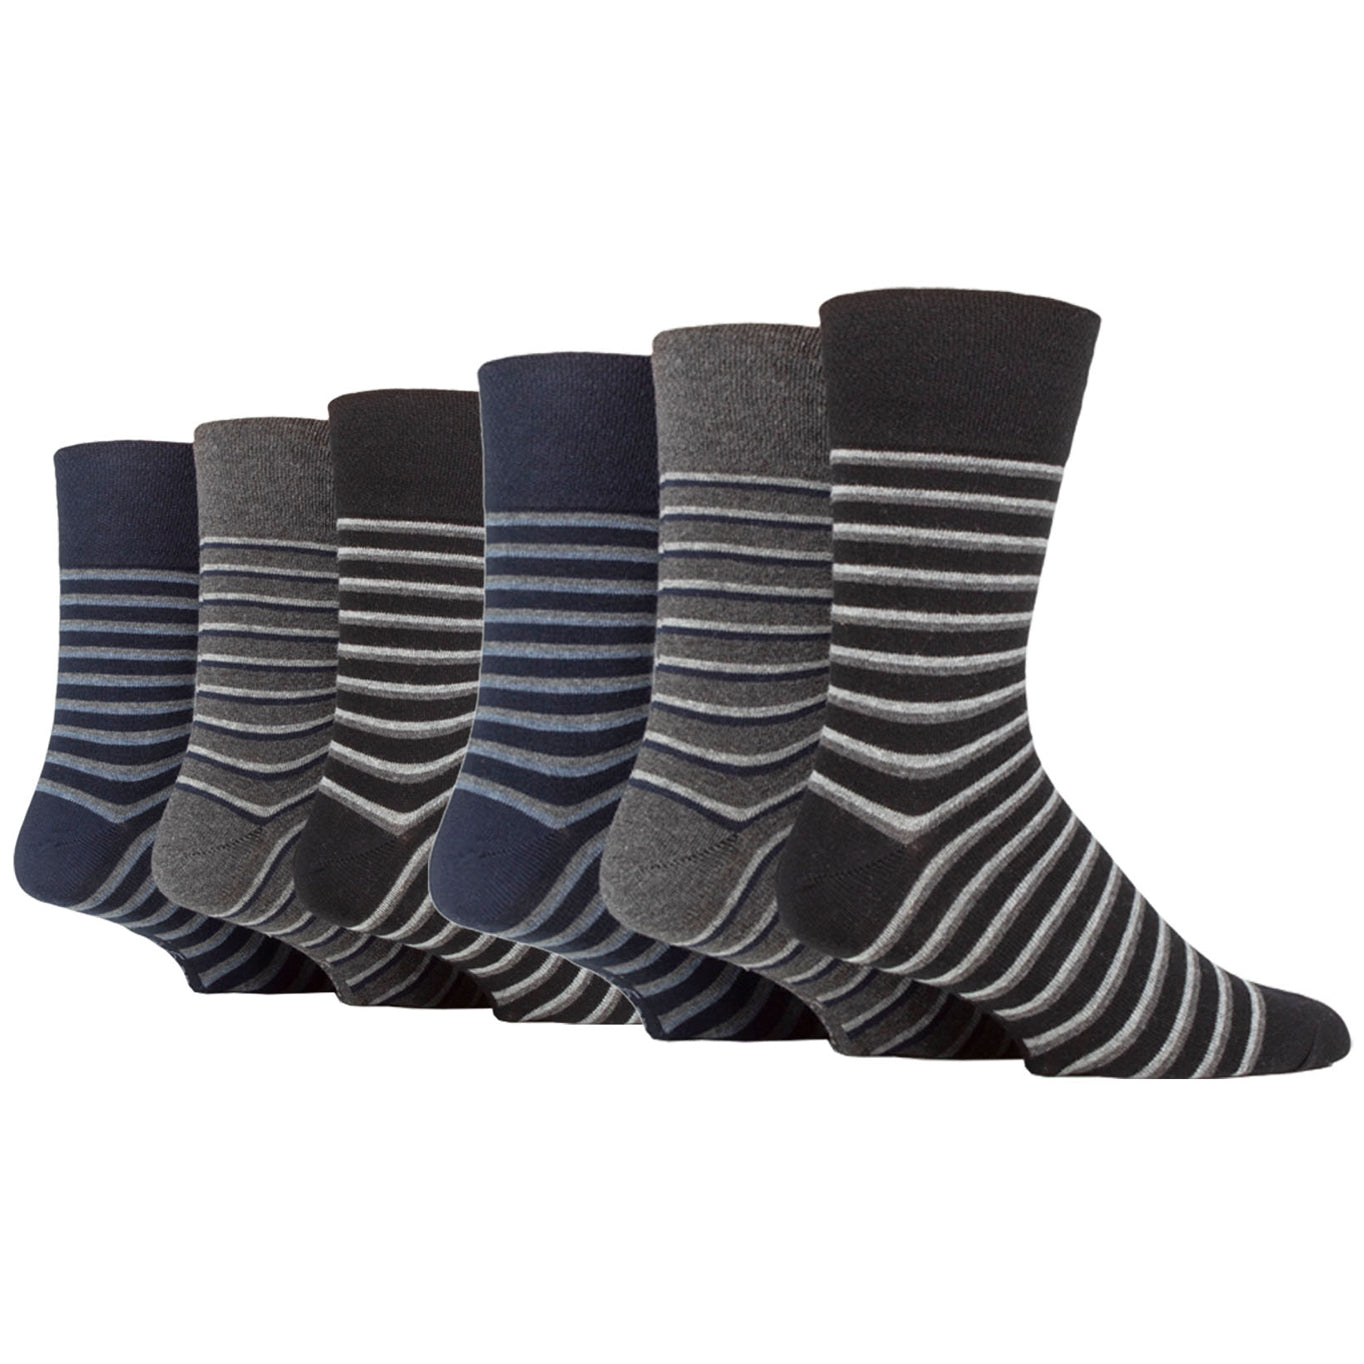 6 Pairs Men's Gentle Grip Litha Varied Stripe Cotton Socks - Black/Navy/Charcoal